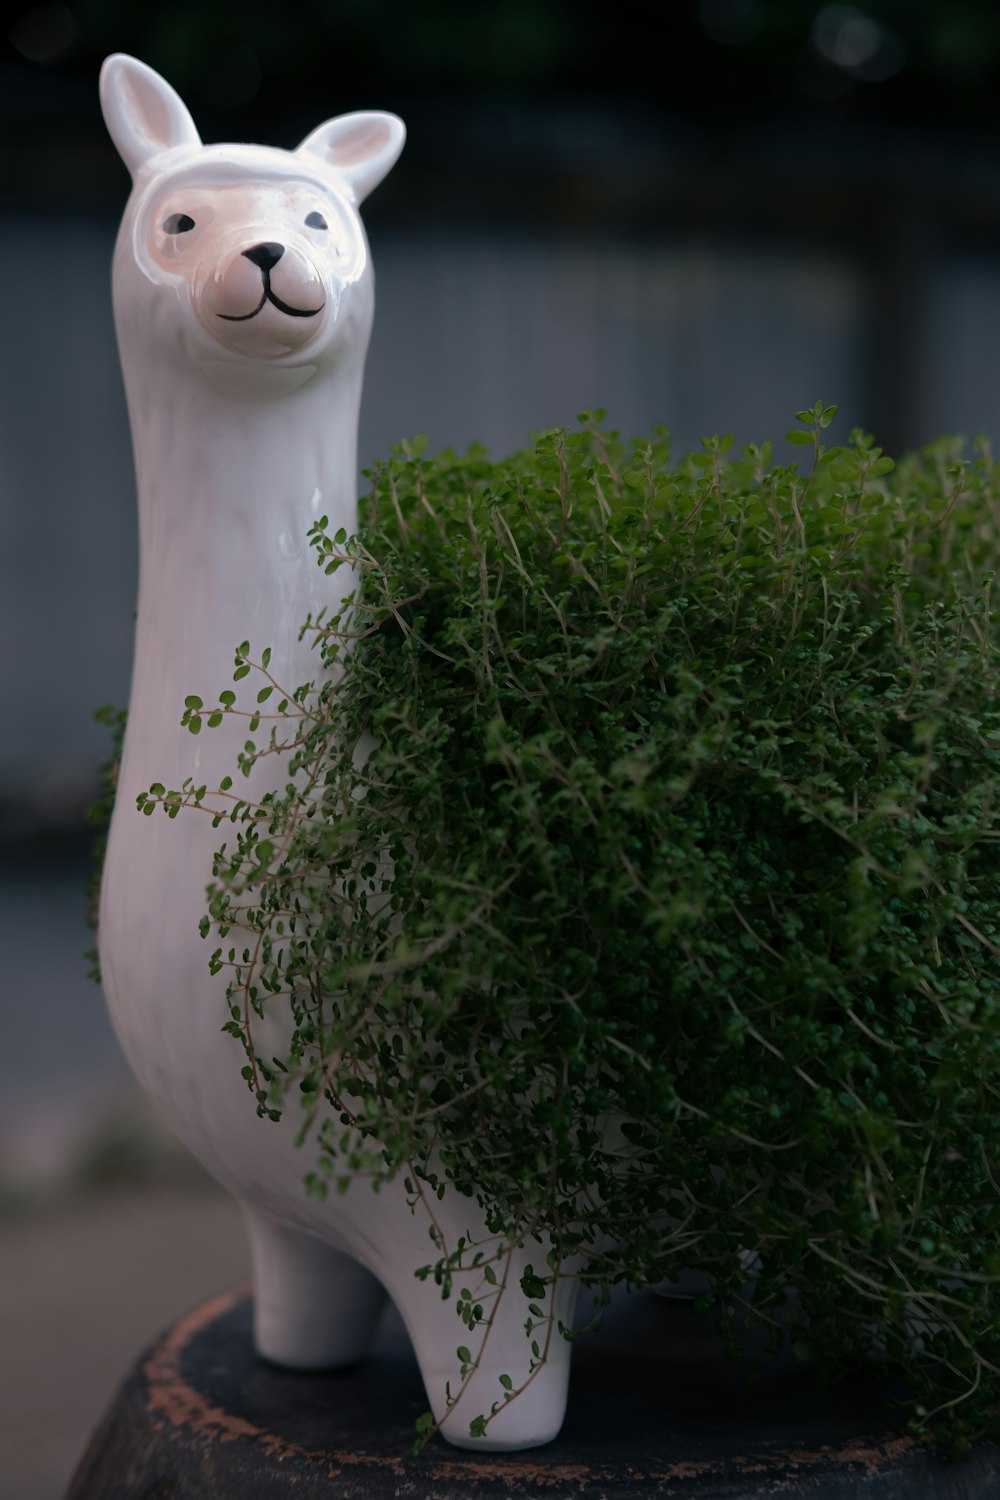 white ceramic owl figurine on green grass